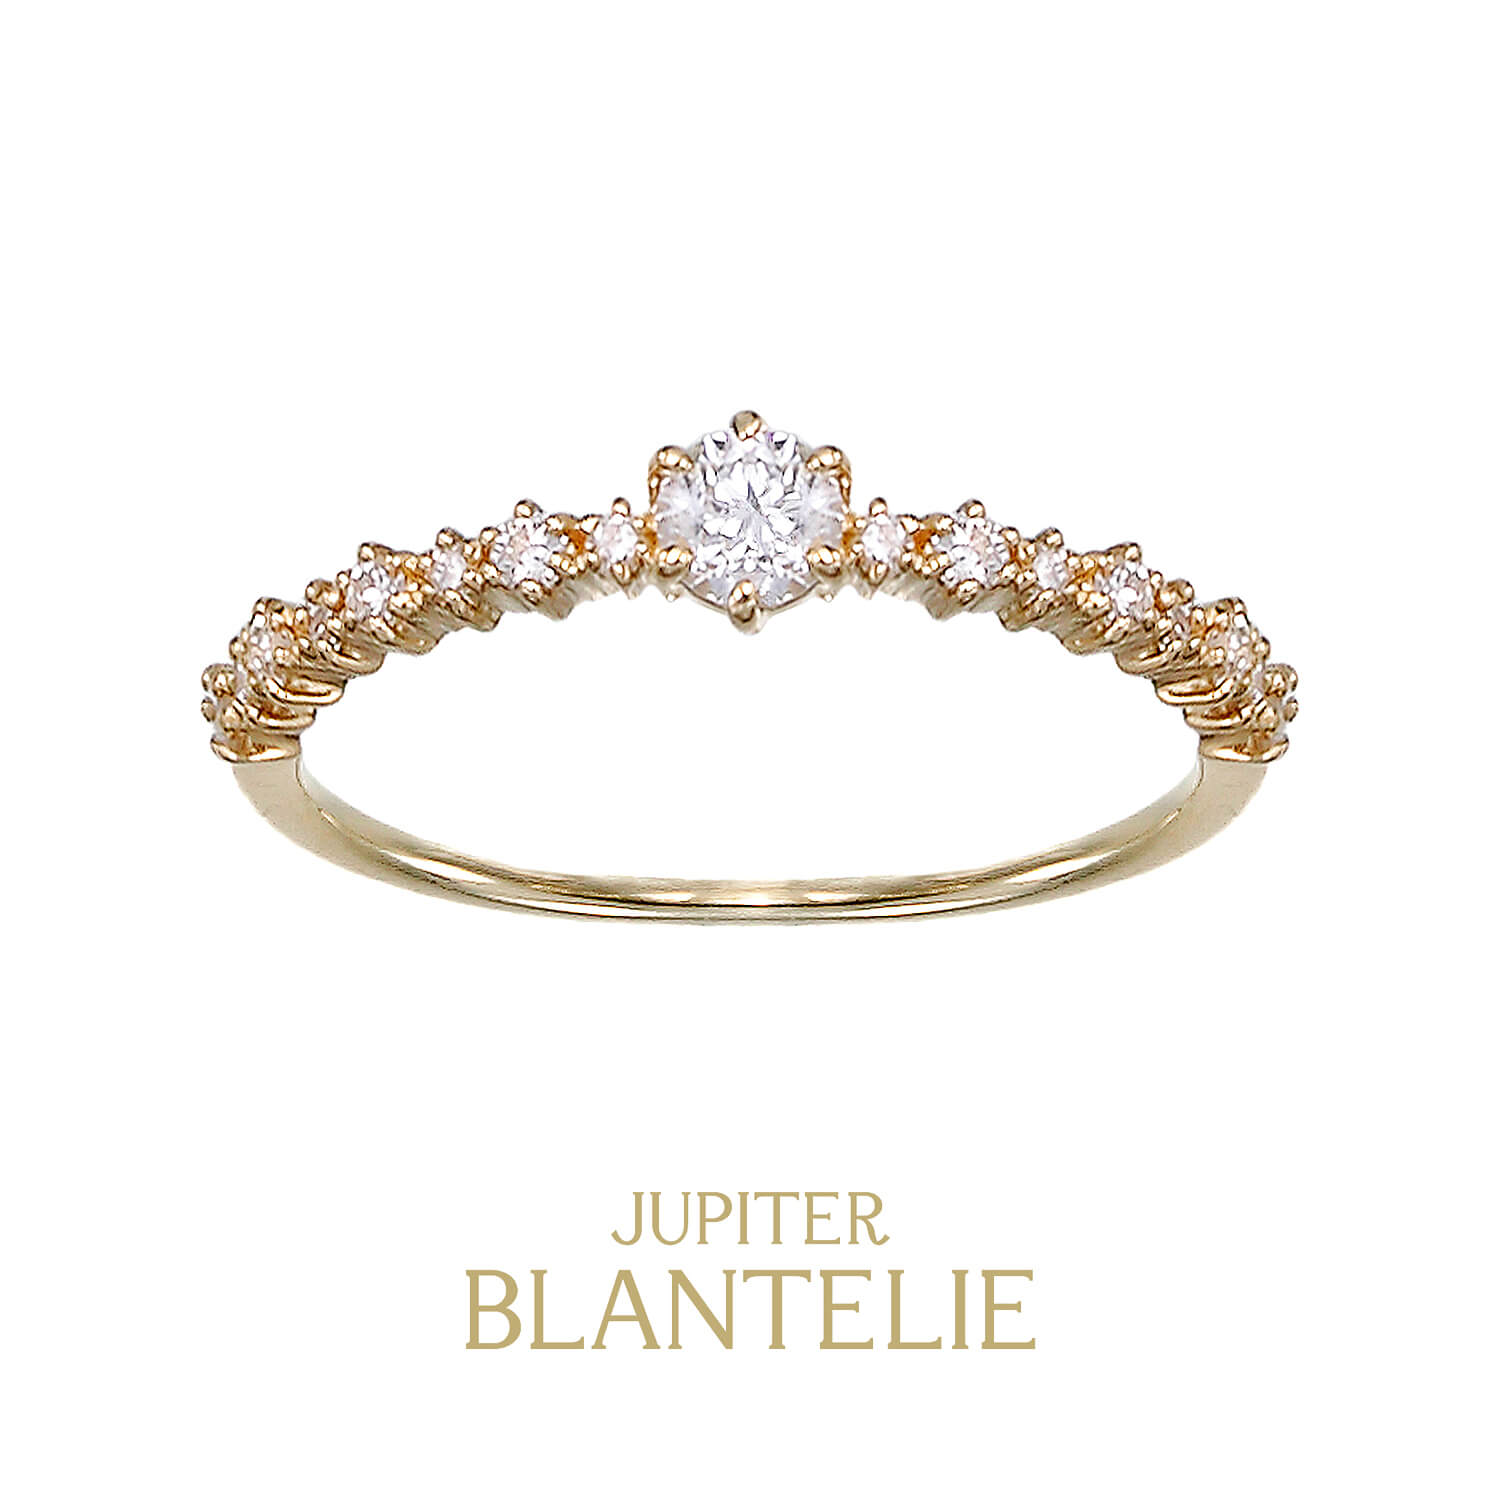 JUPITERBLANTELIEジュピターブラントリエの婚約指輪lamerラメール